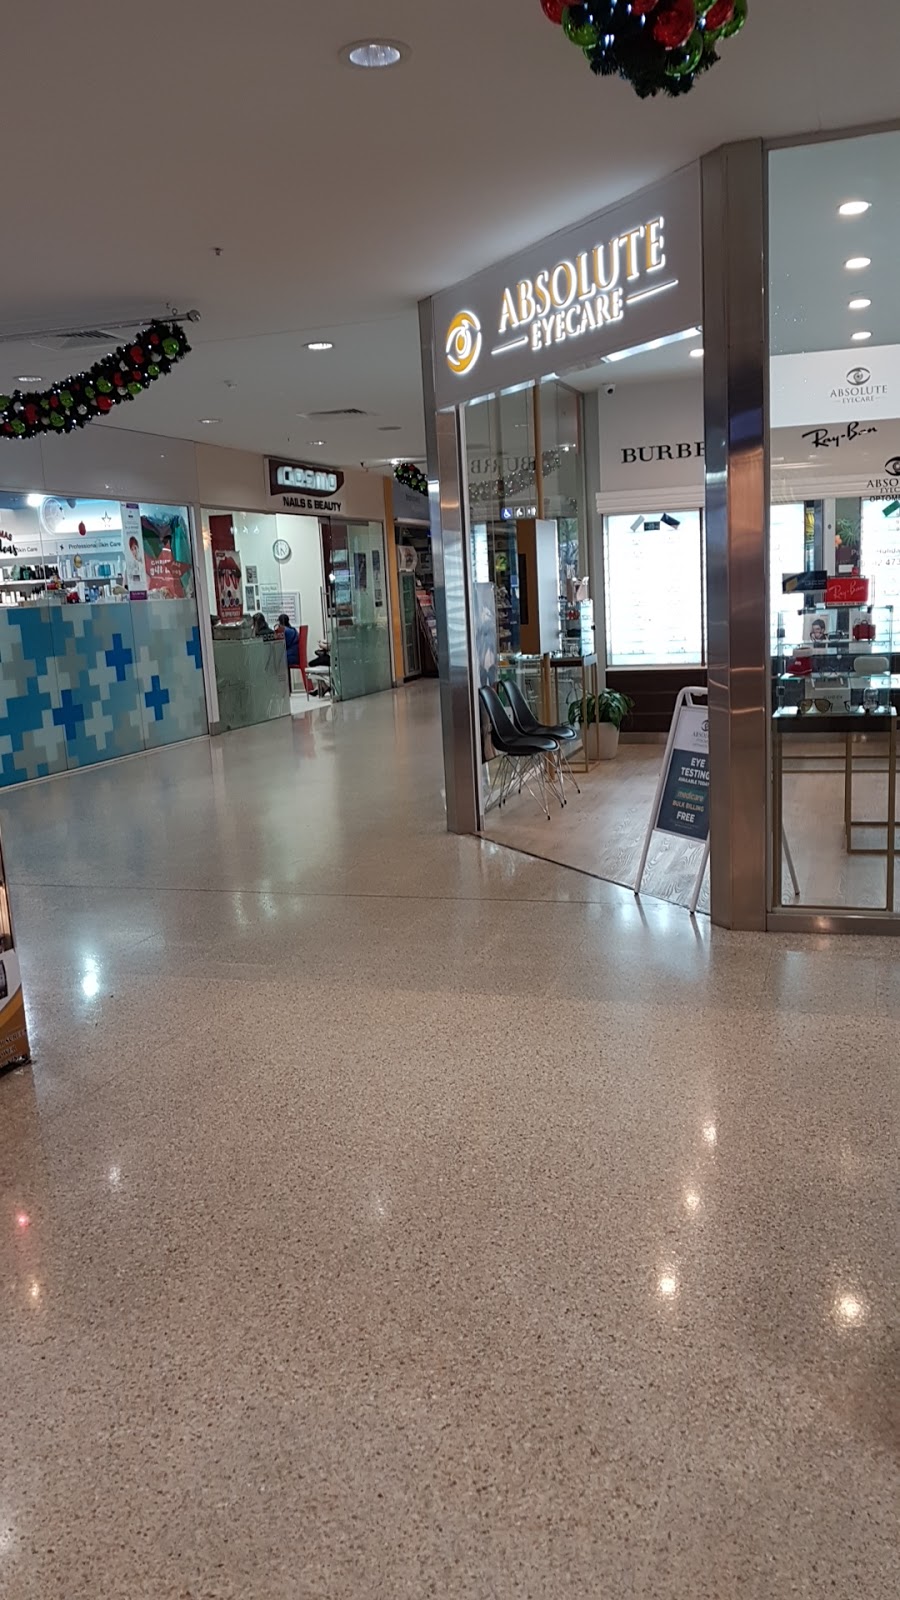 Lennox Village | shopping mall | Cnr Great Western Highway & Pyramid Street, Emu Plains NSW 2750, Australia | 0247356742 OR +61 2 4735 6742